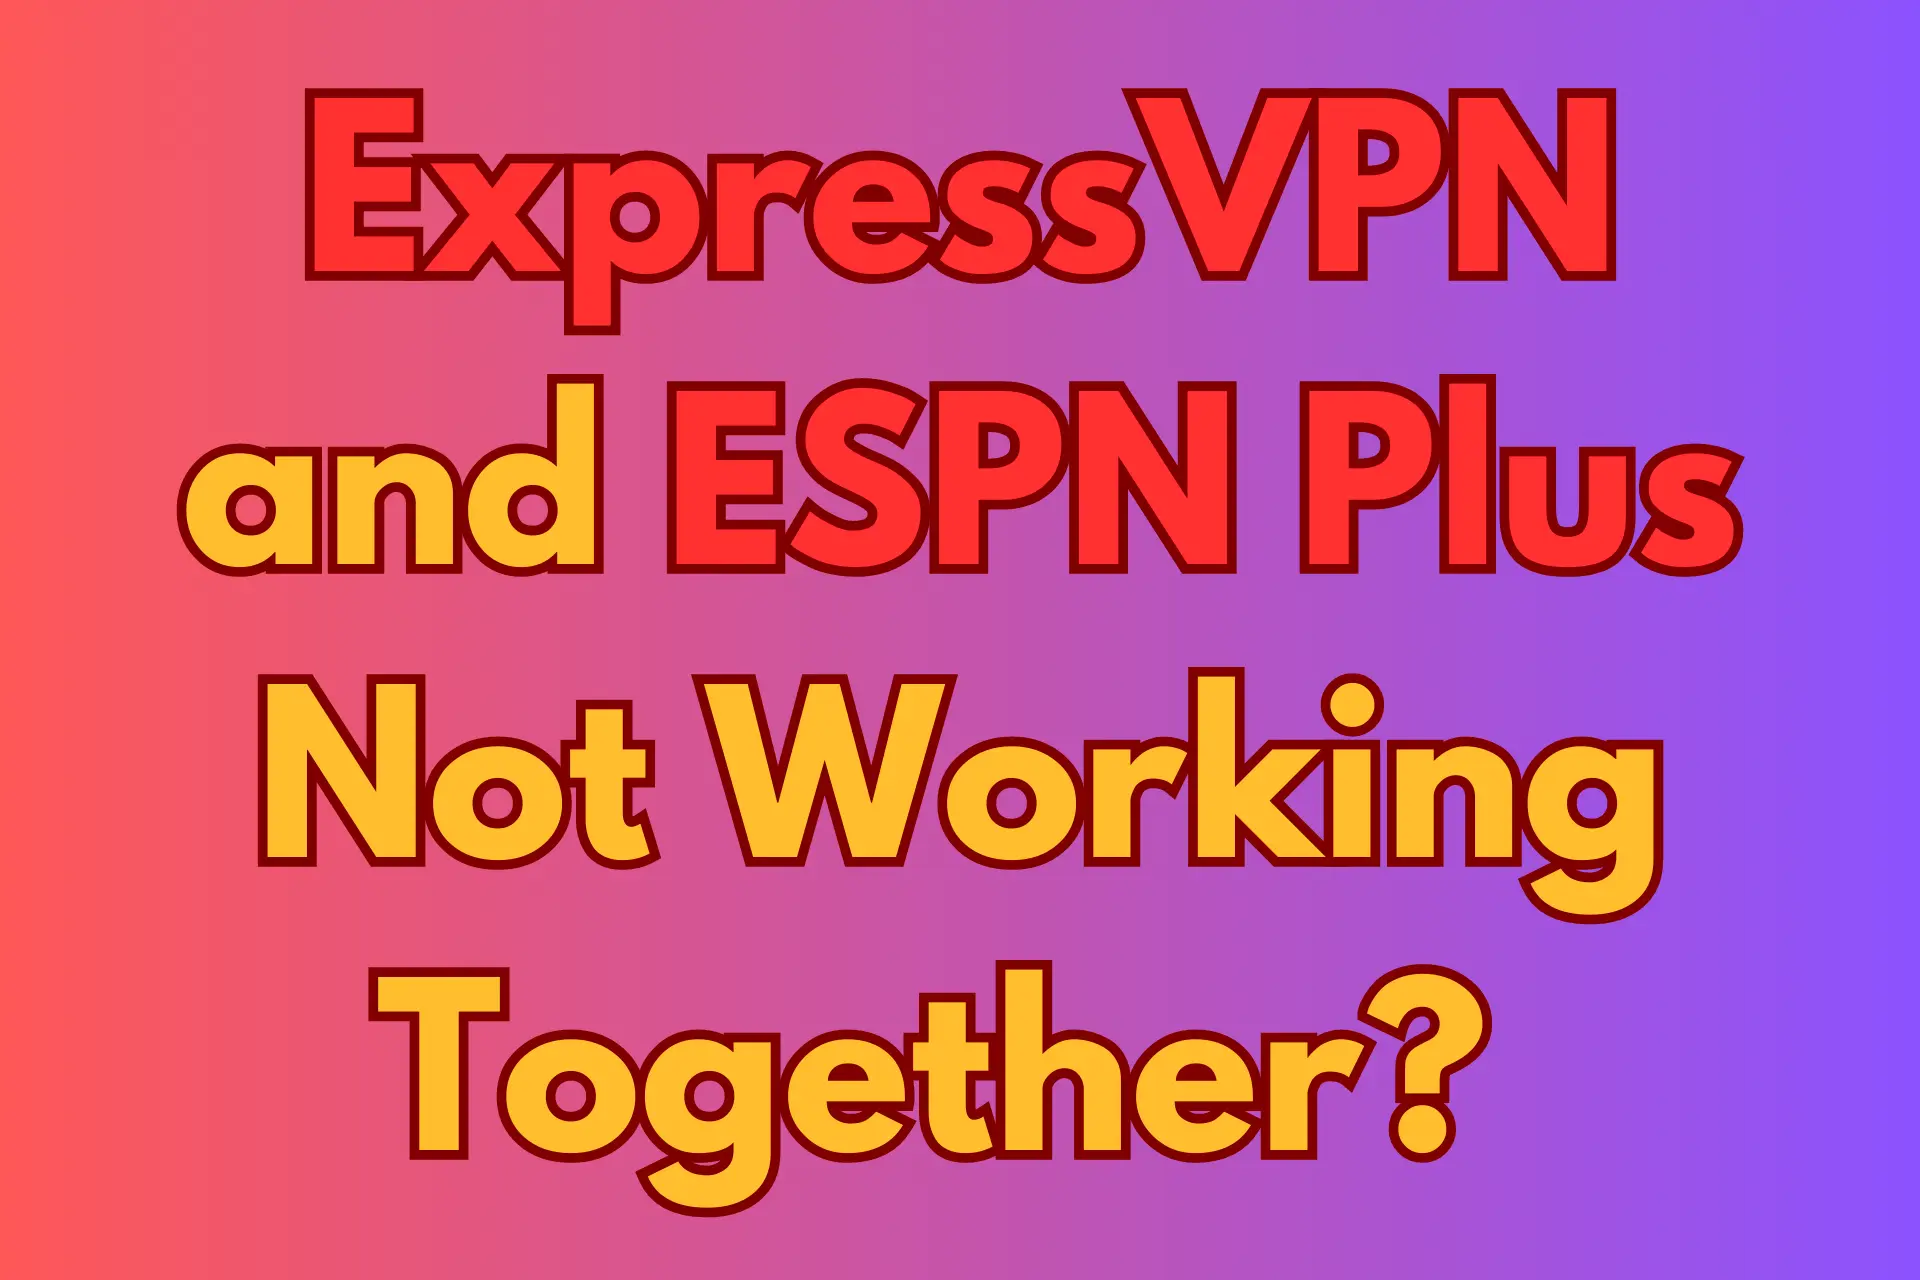 ExpressVPN and ESPN Plus not working together